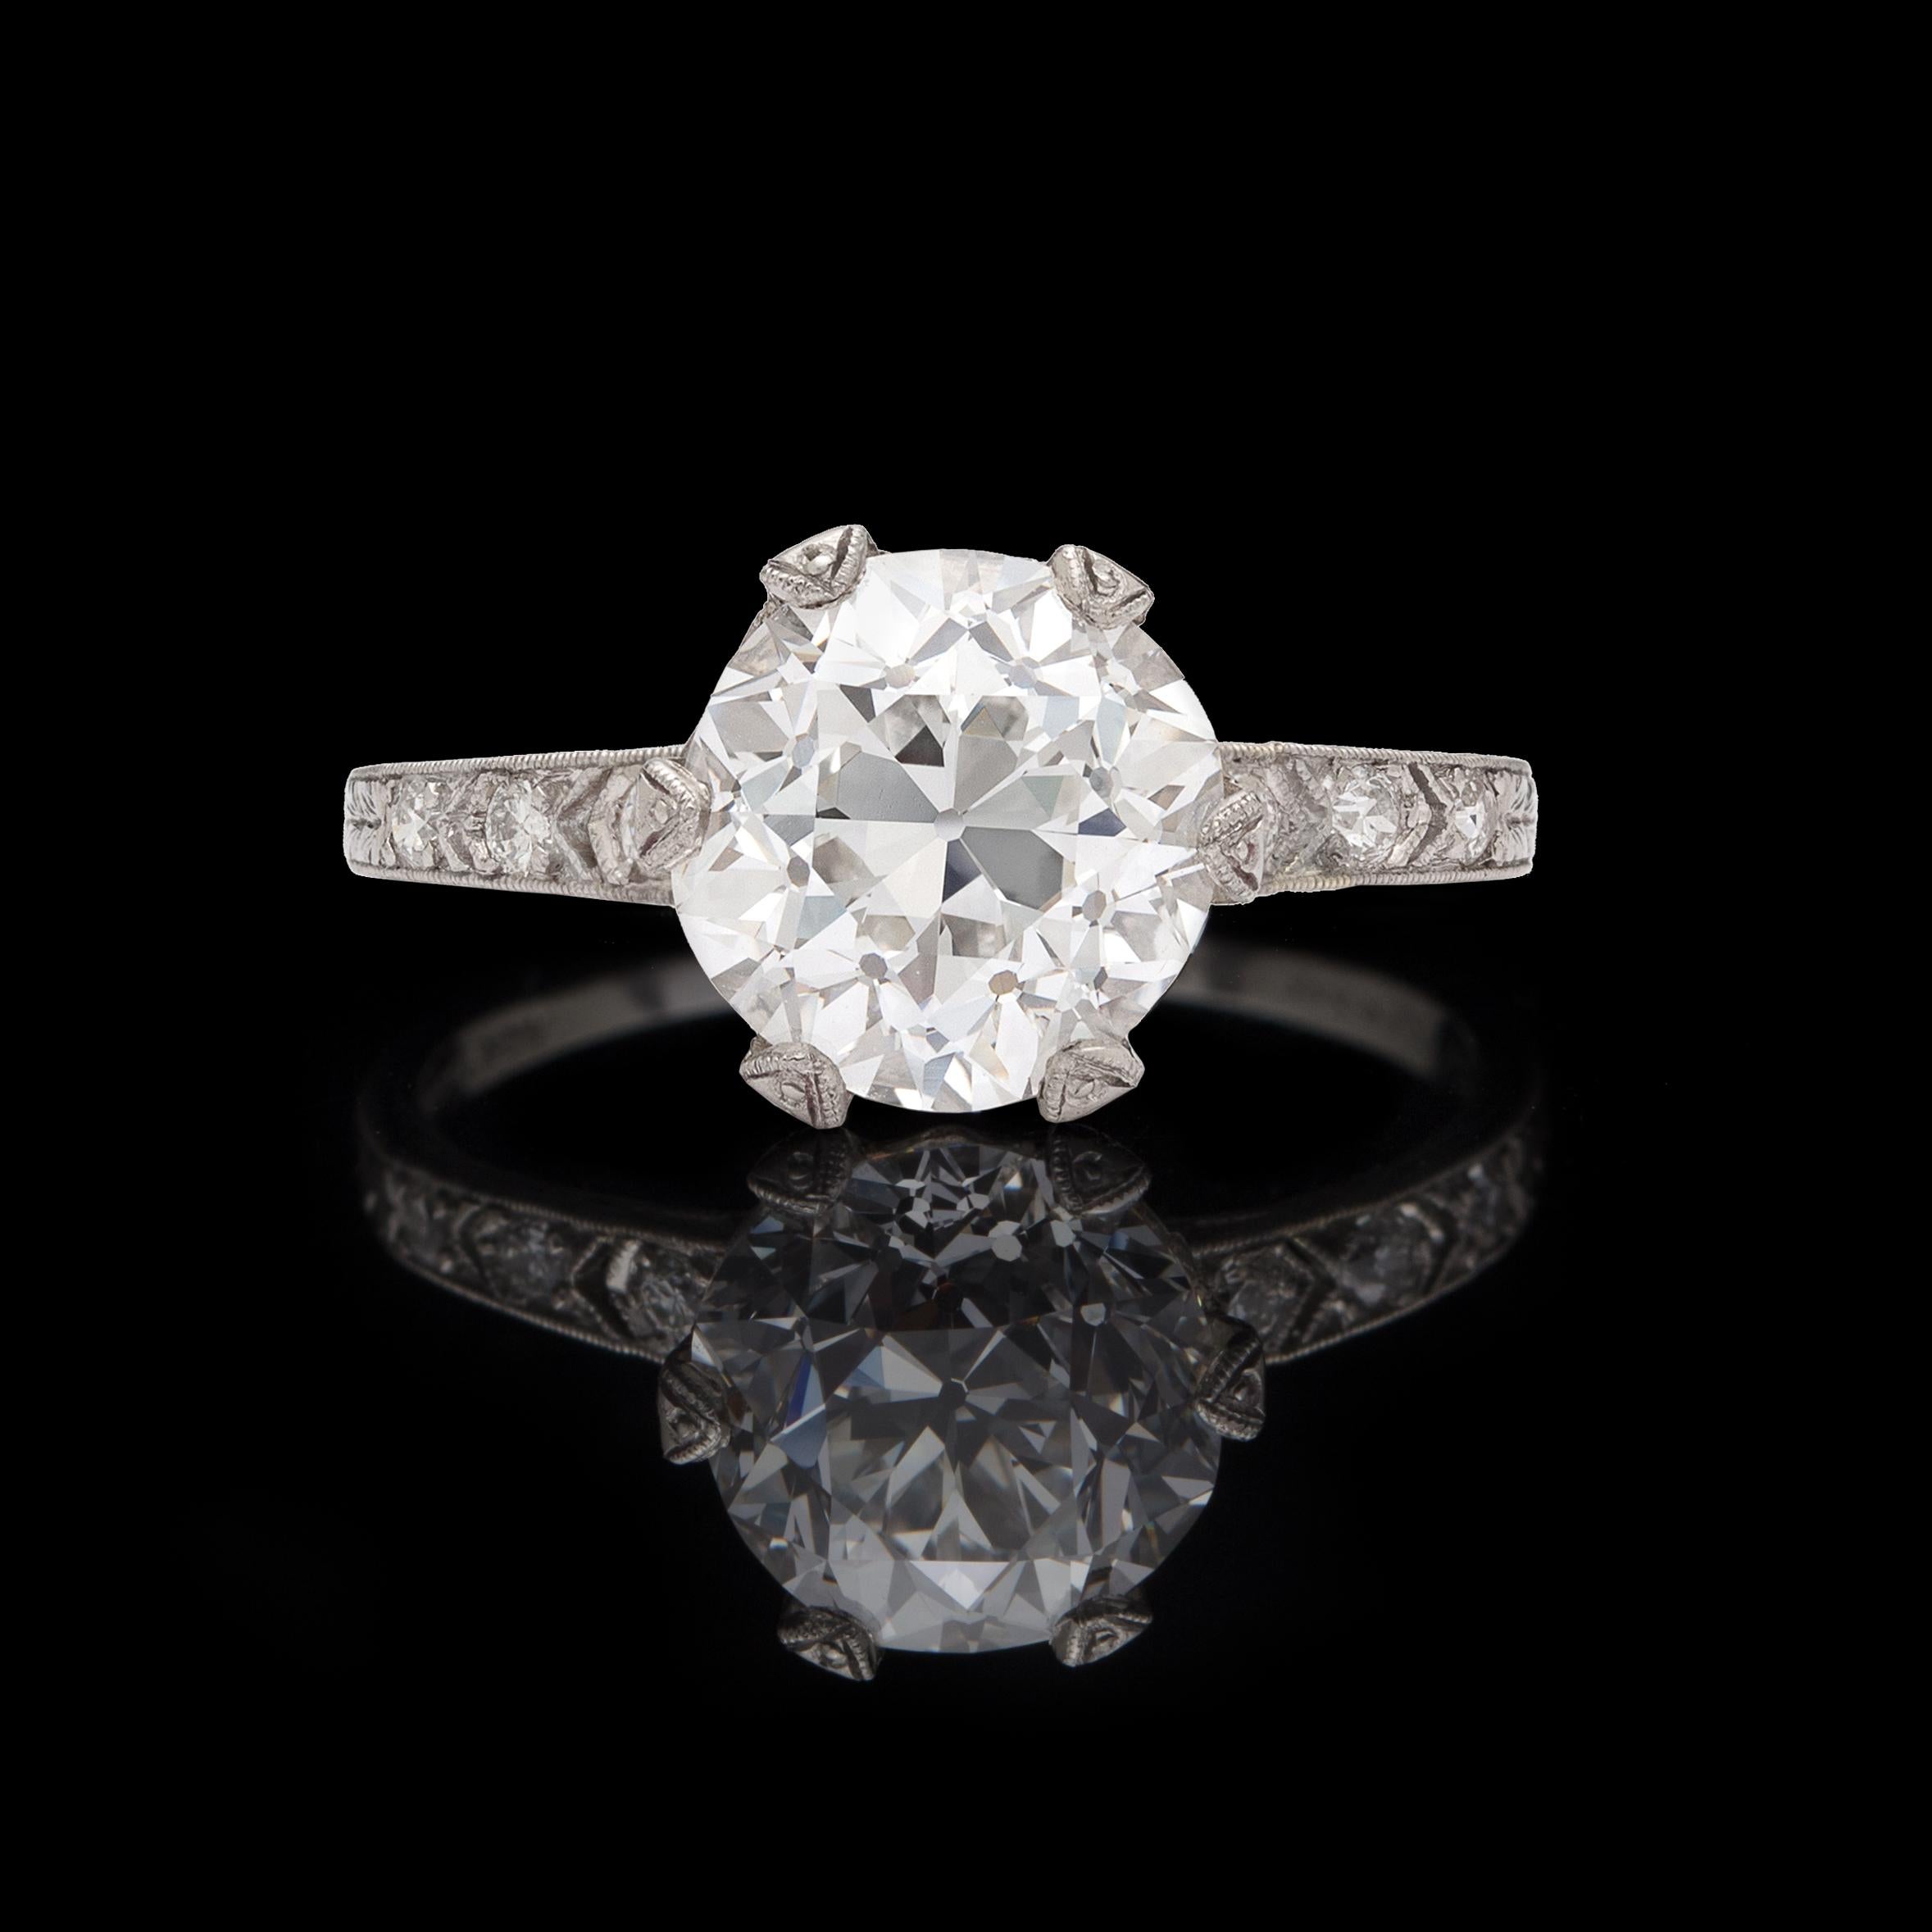 Art Deco Stunning GIA 3.12 Carat Antique Diamond Ring by Tiffany & Co.